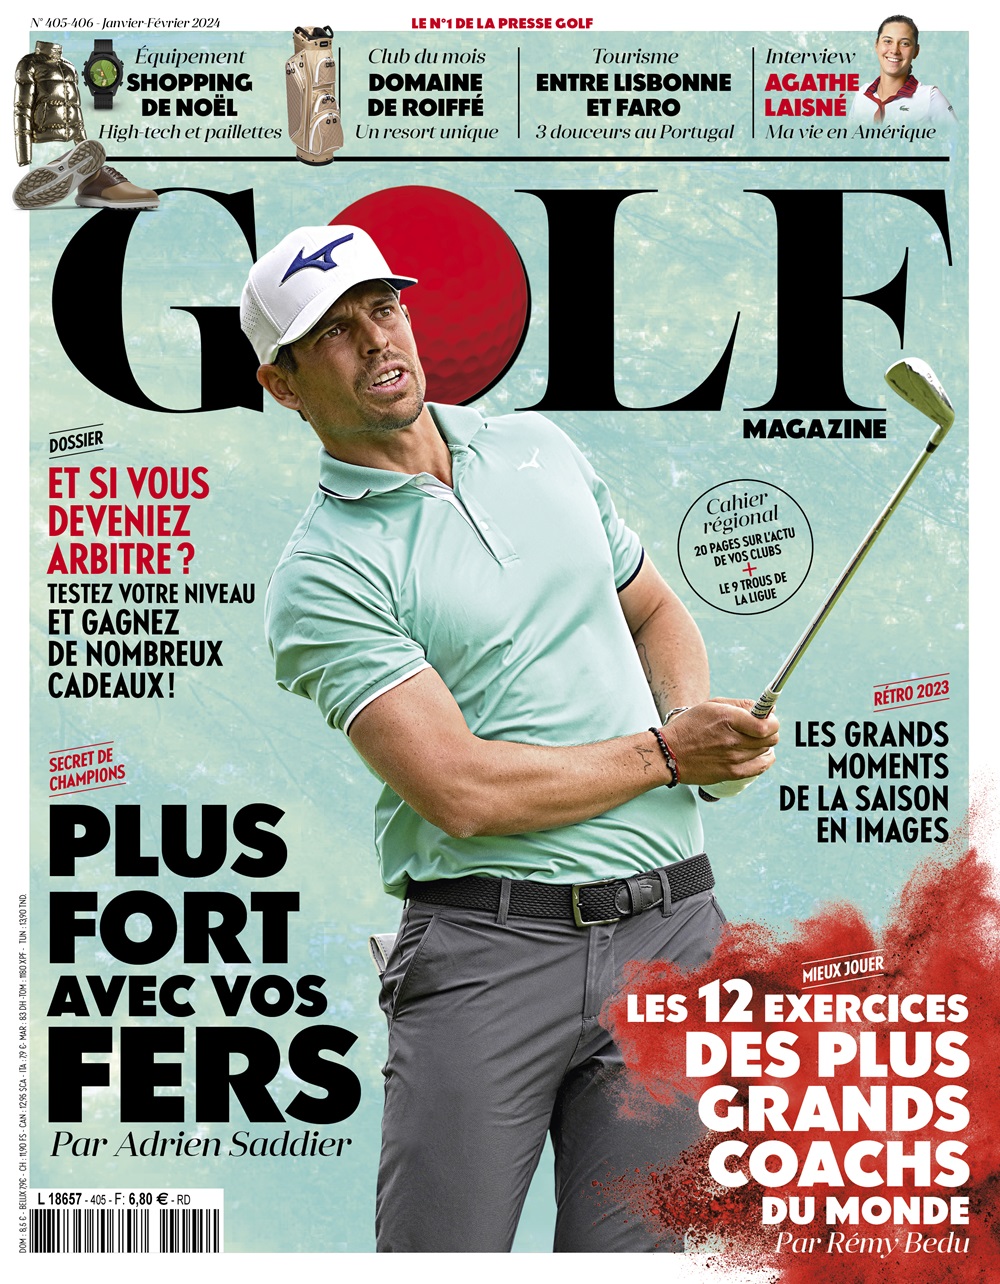 Golf Magazine n°405-406 : plus fort avec vos fers !